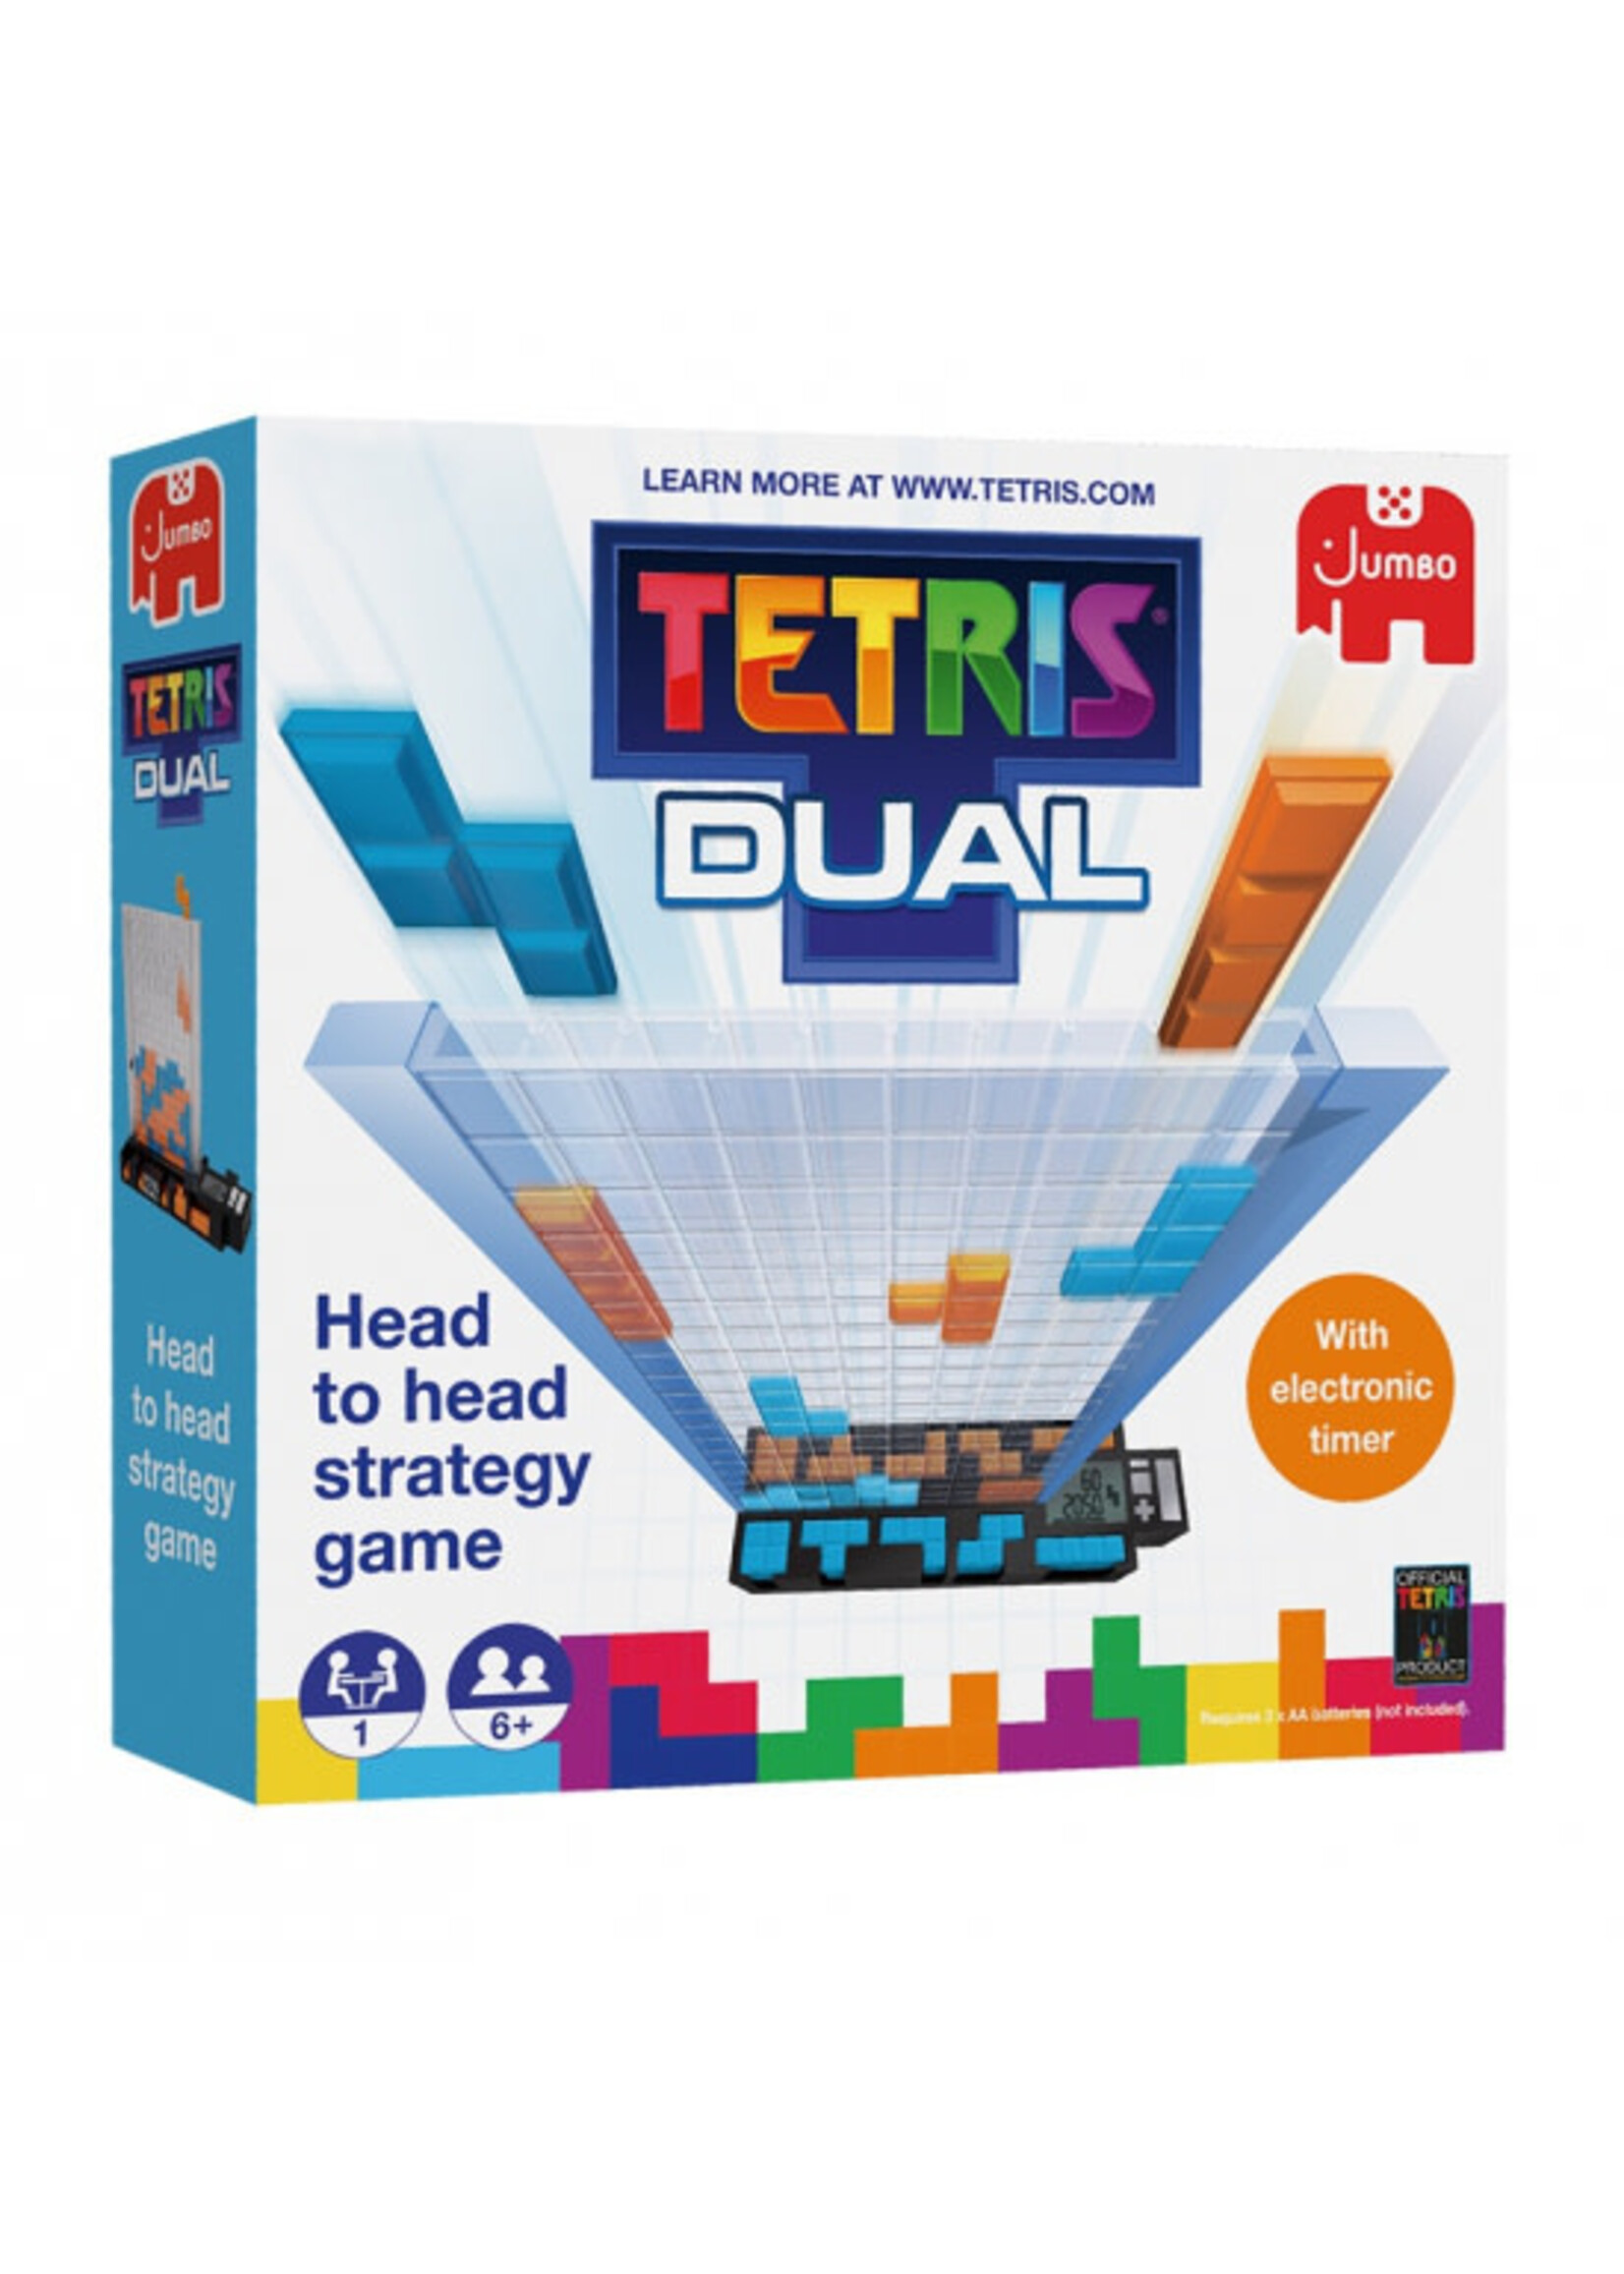 Tetris dual